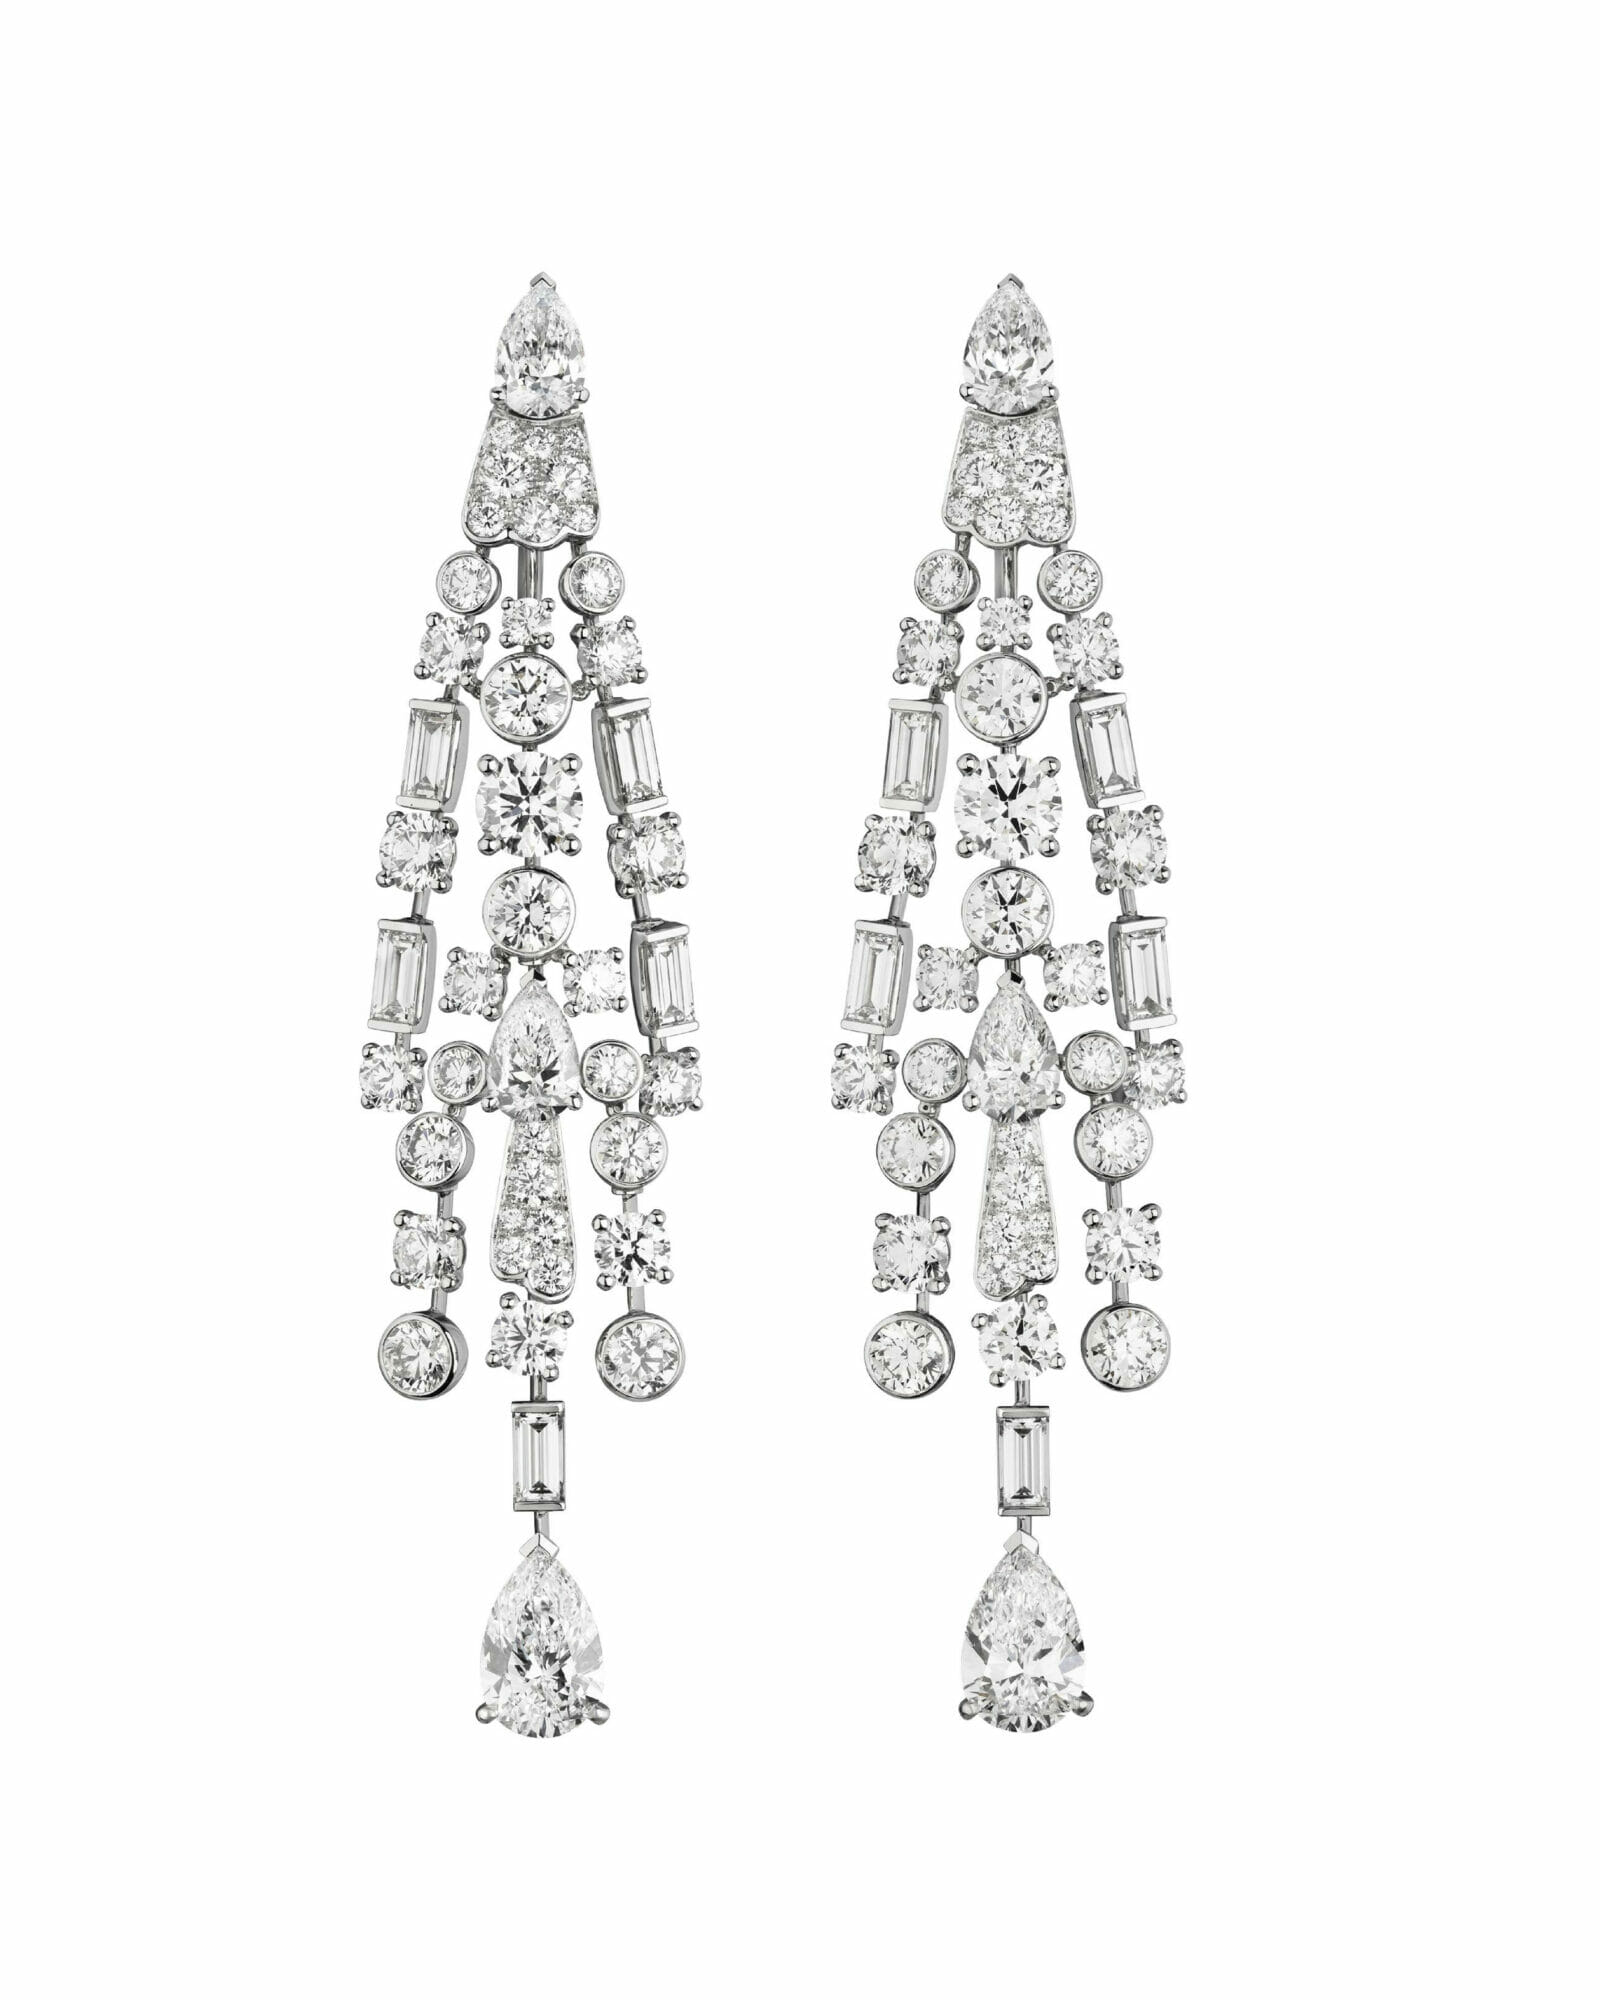 Chanel Diamond Earrings Collection, 1932